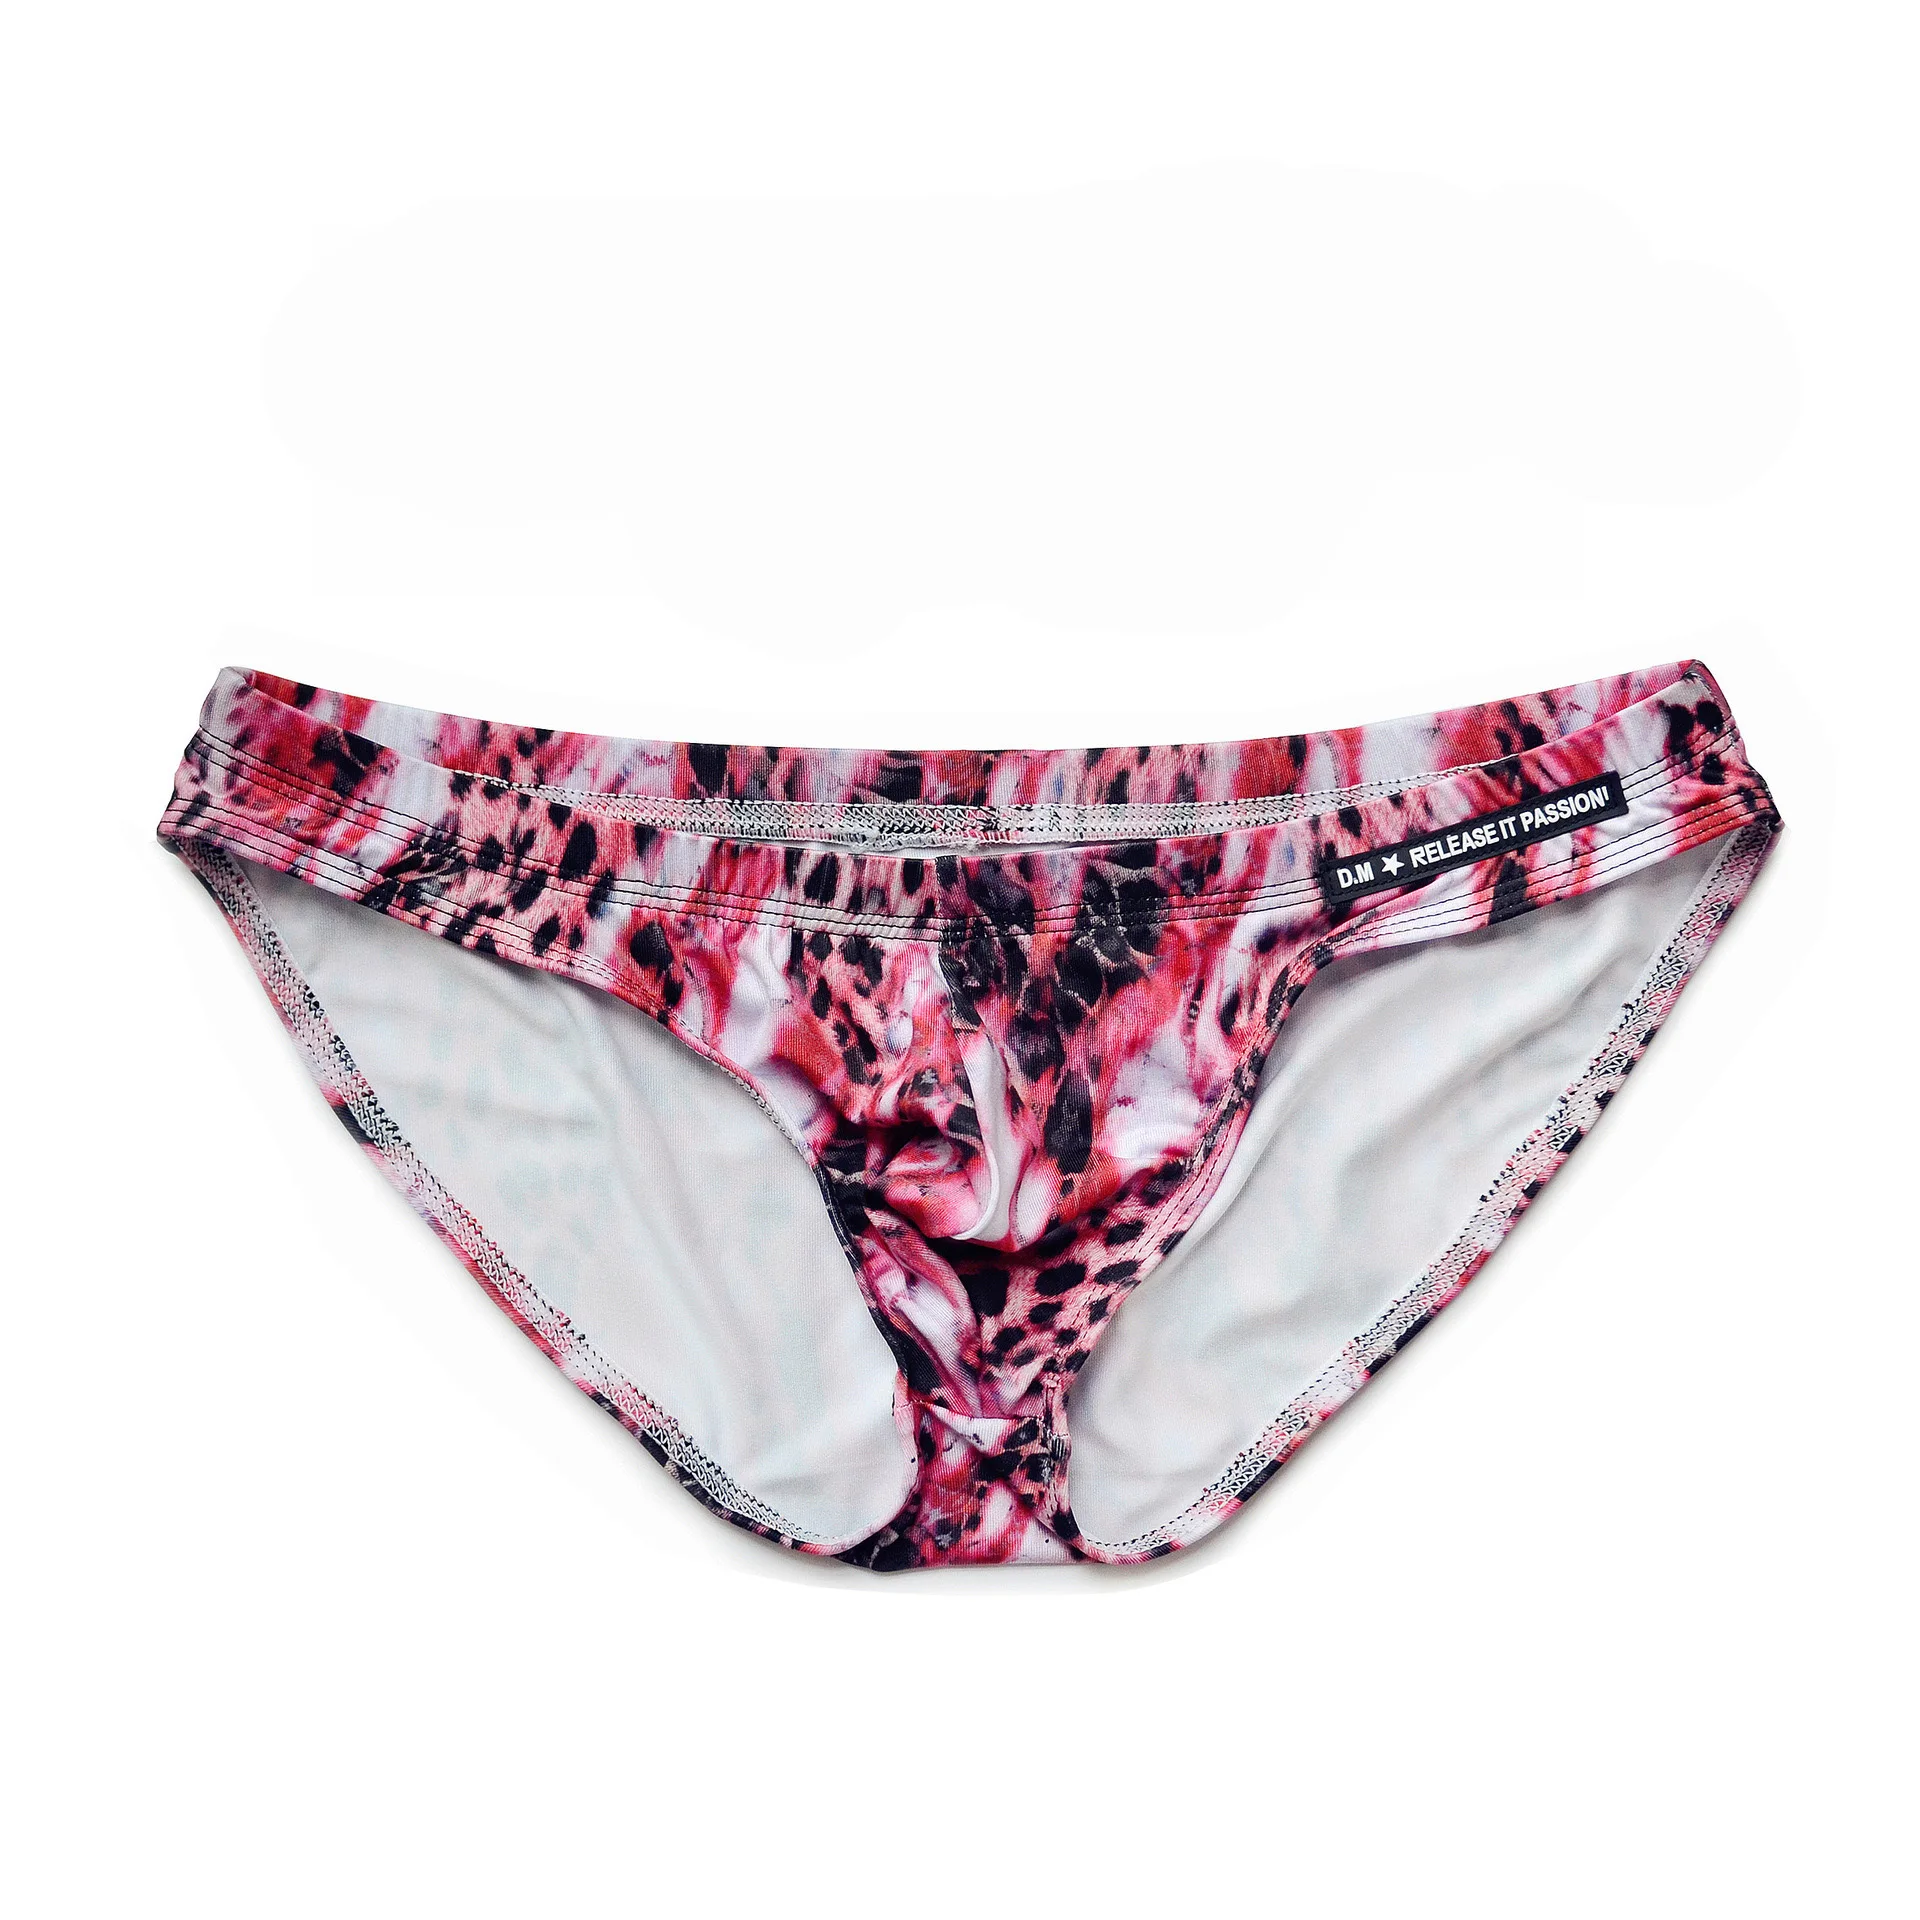 Men's Underwear Cotton Men's Underwear Low Waist Breathable Panties Leopard Comfort Brand Shorts Lomonling